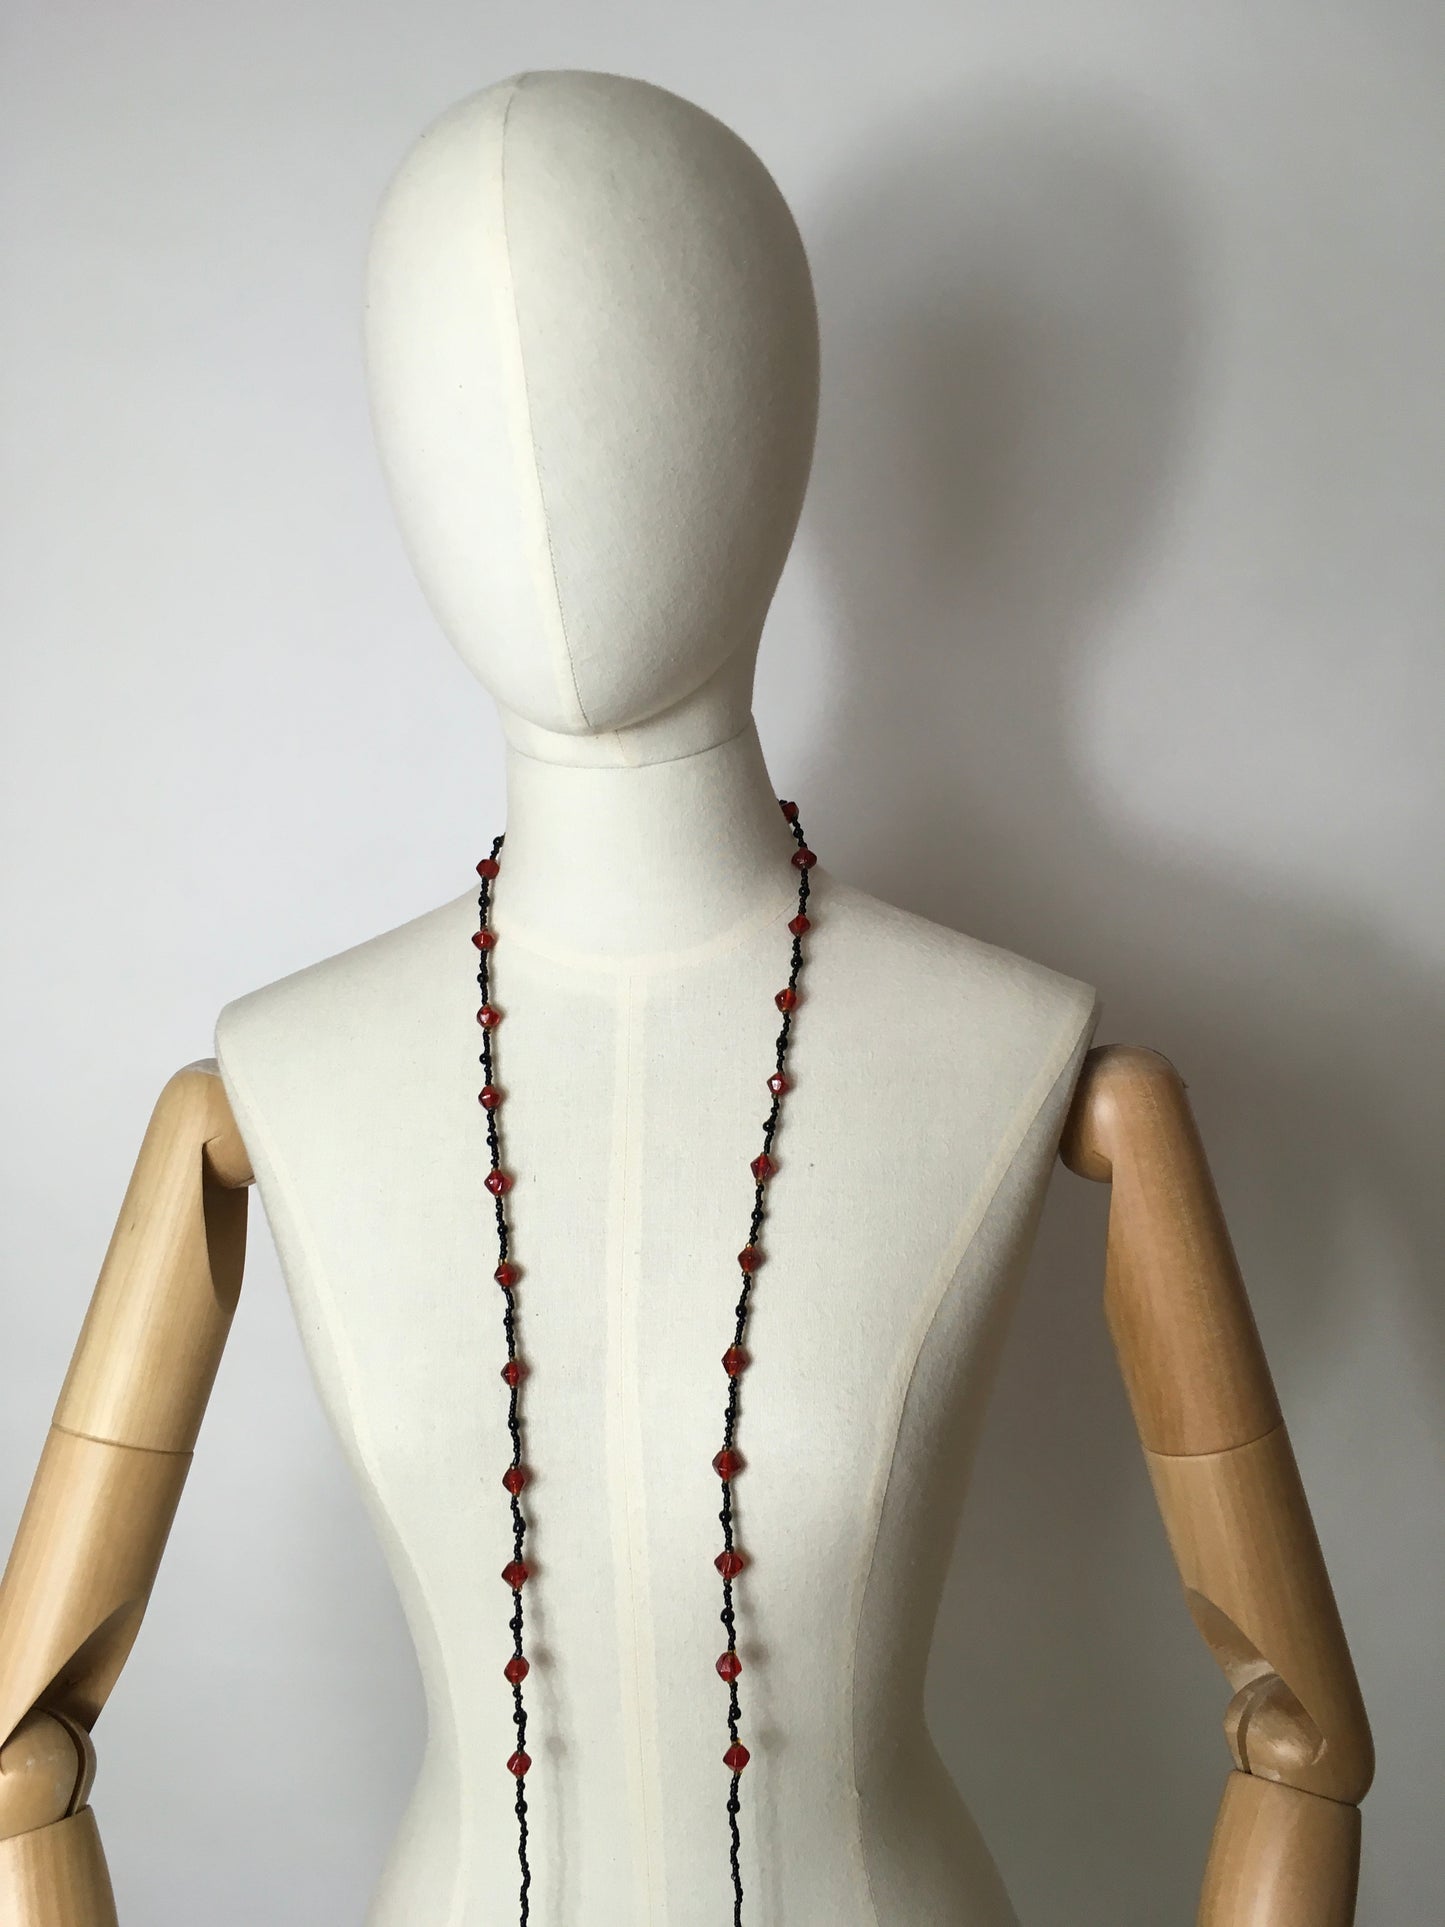 Original 1920s Flapper Glass Beaded Necklace - Fabulous Red & Black Colours